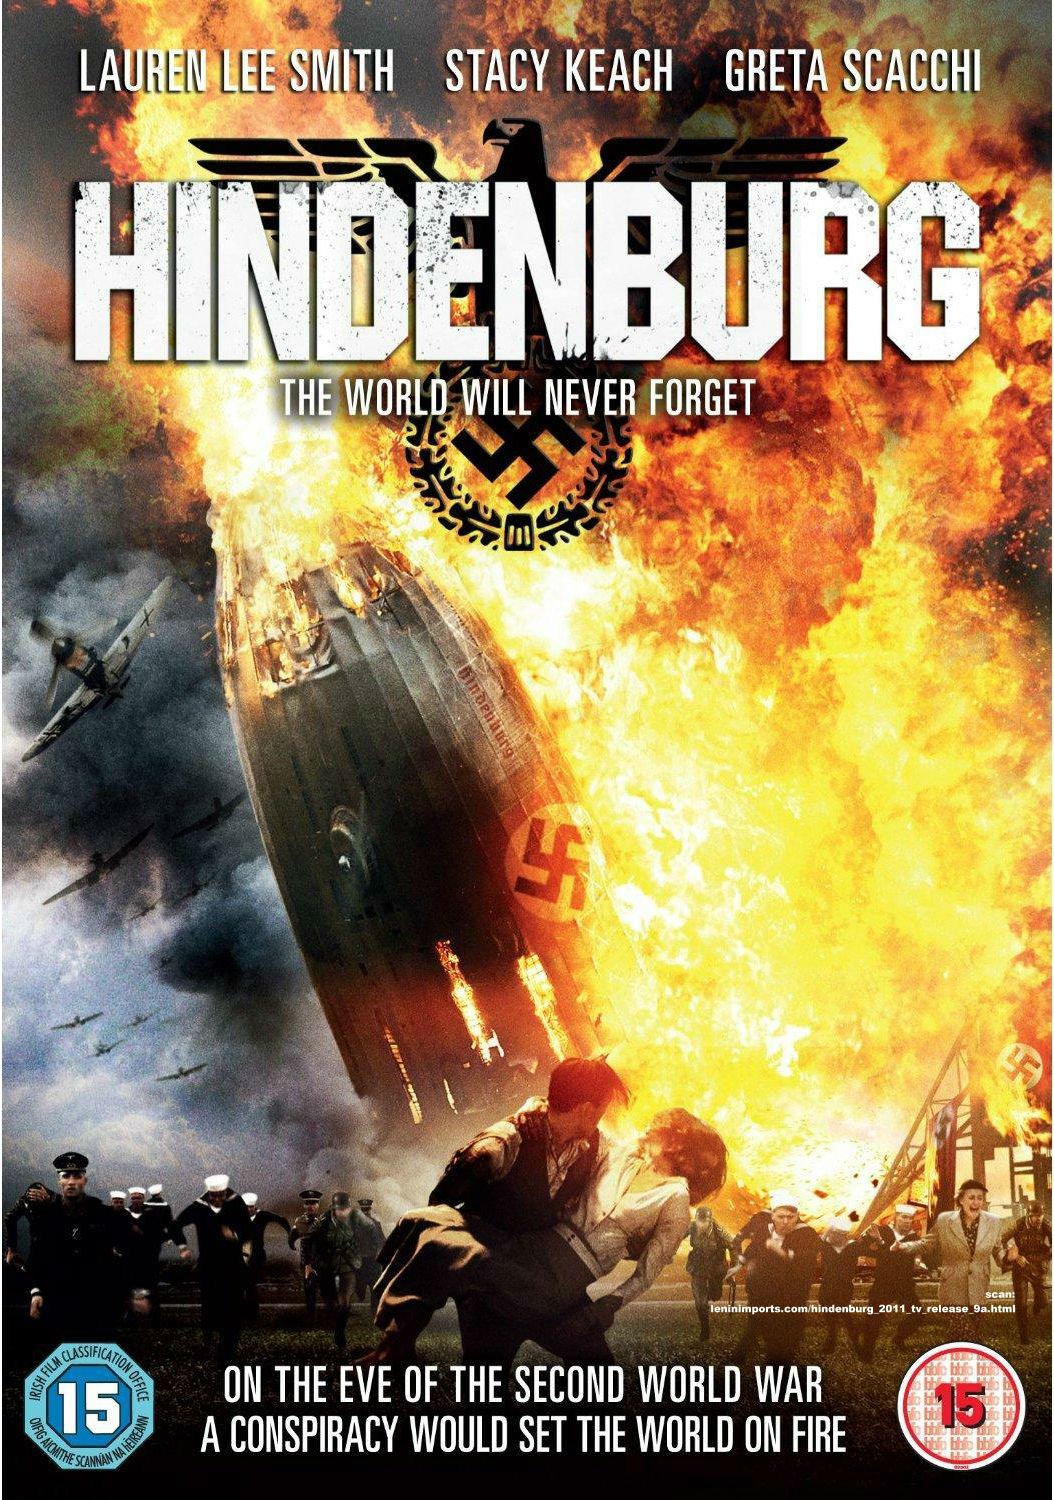 Hindenburg the last flight dvd torrent torchlight update 14 reloaded torrents